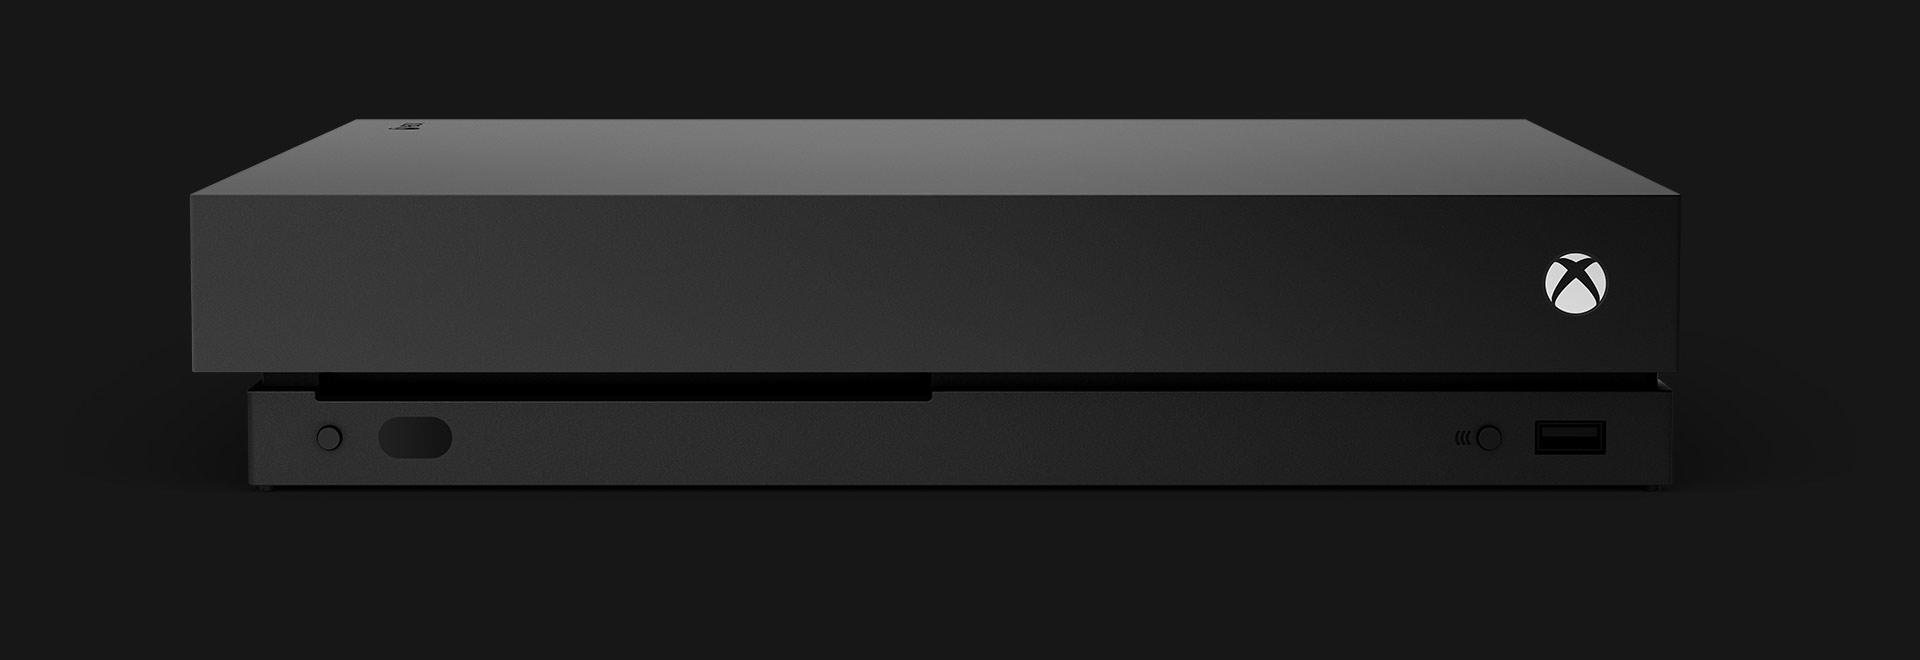 Vue frontale d’une console Xbox One X.